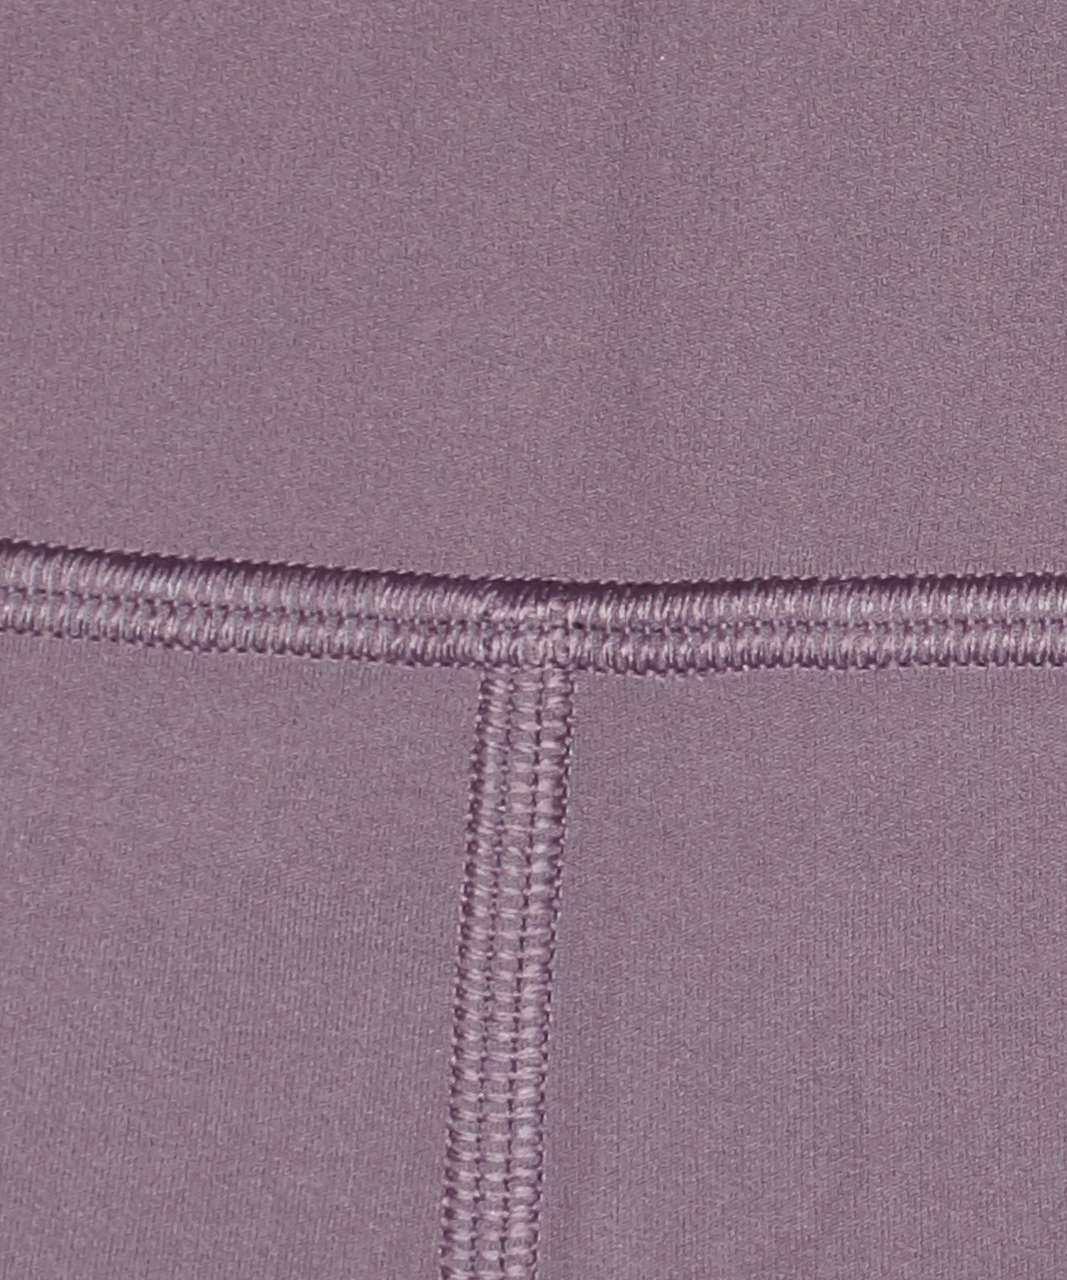 Lululemon Align Short *4" - Graphite Purple